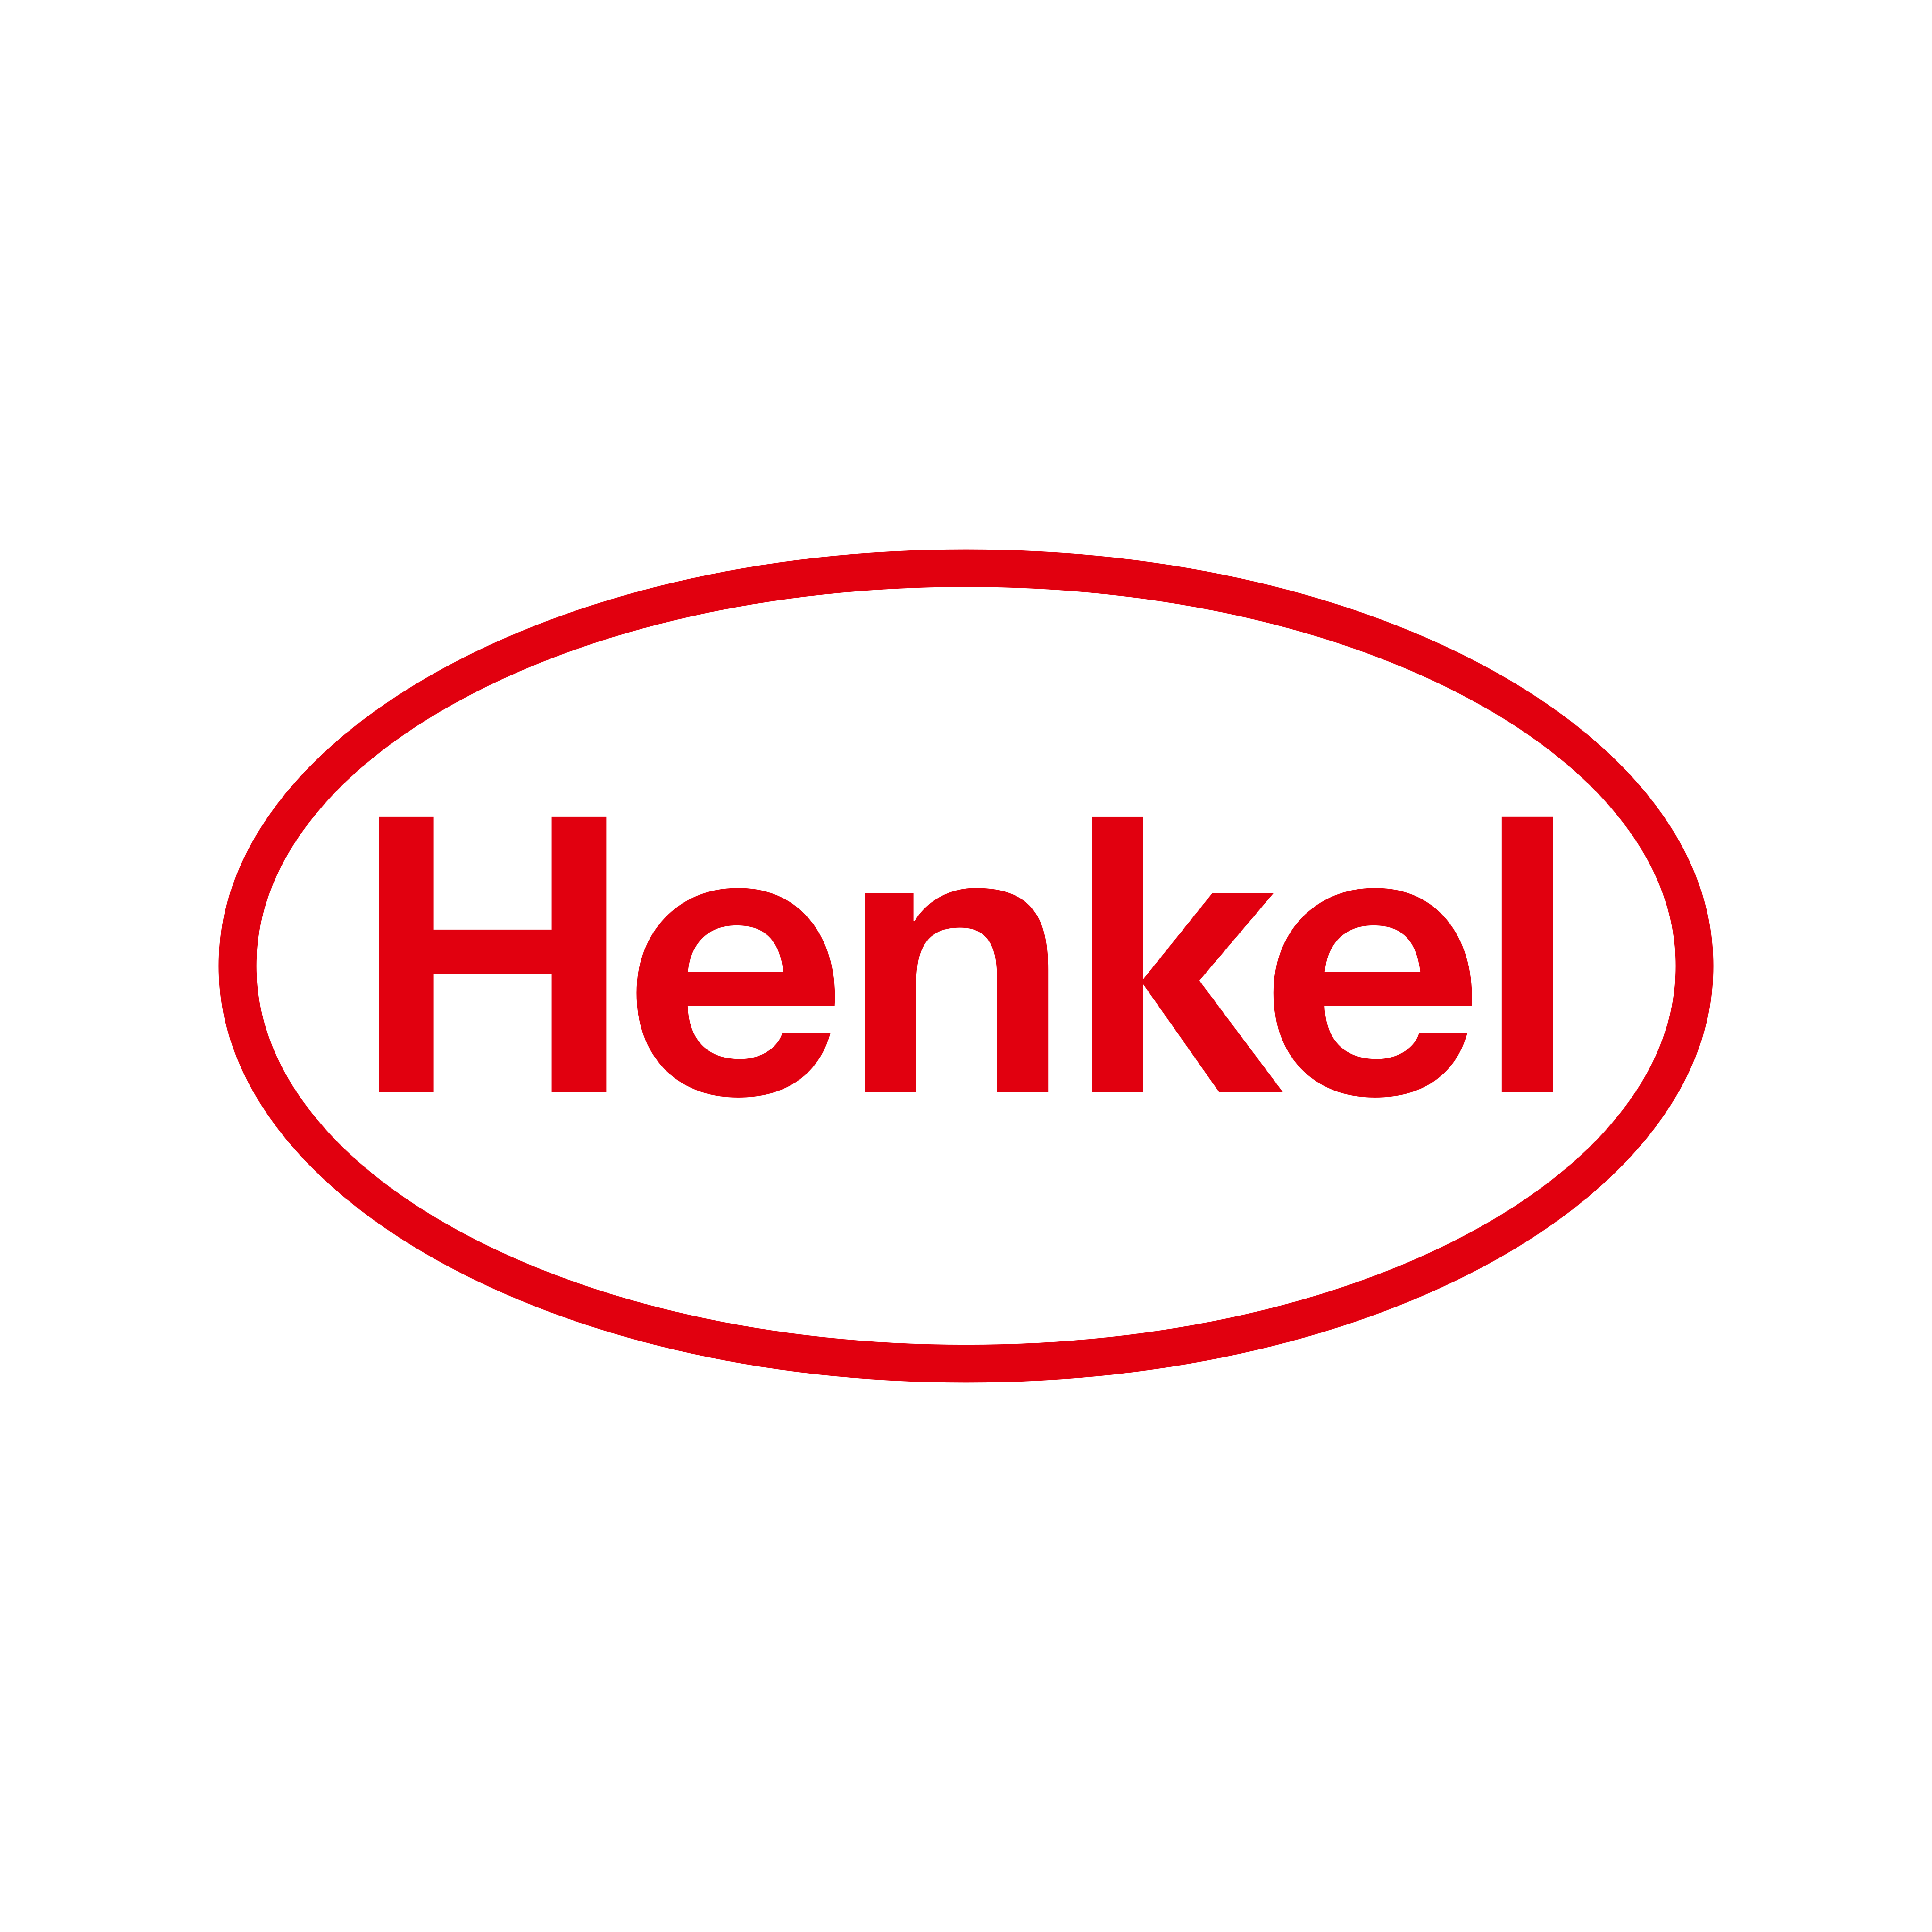 henkel logo 0 - Henkel Logo